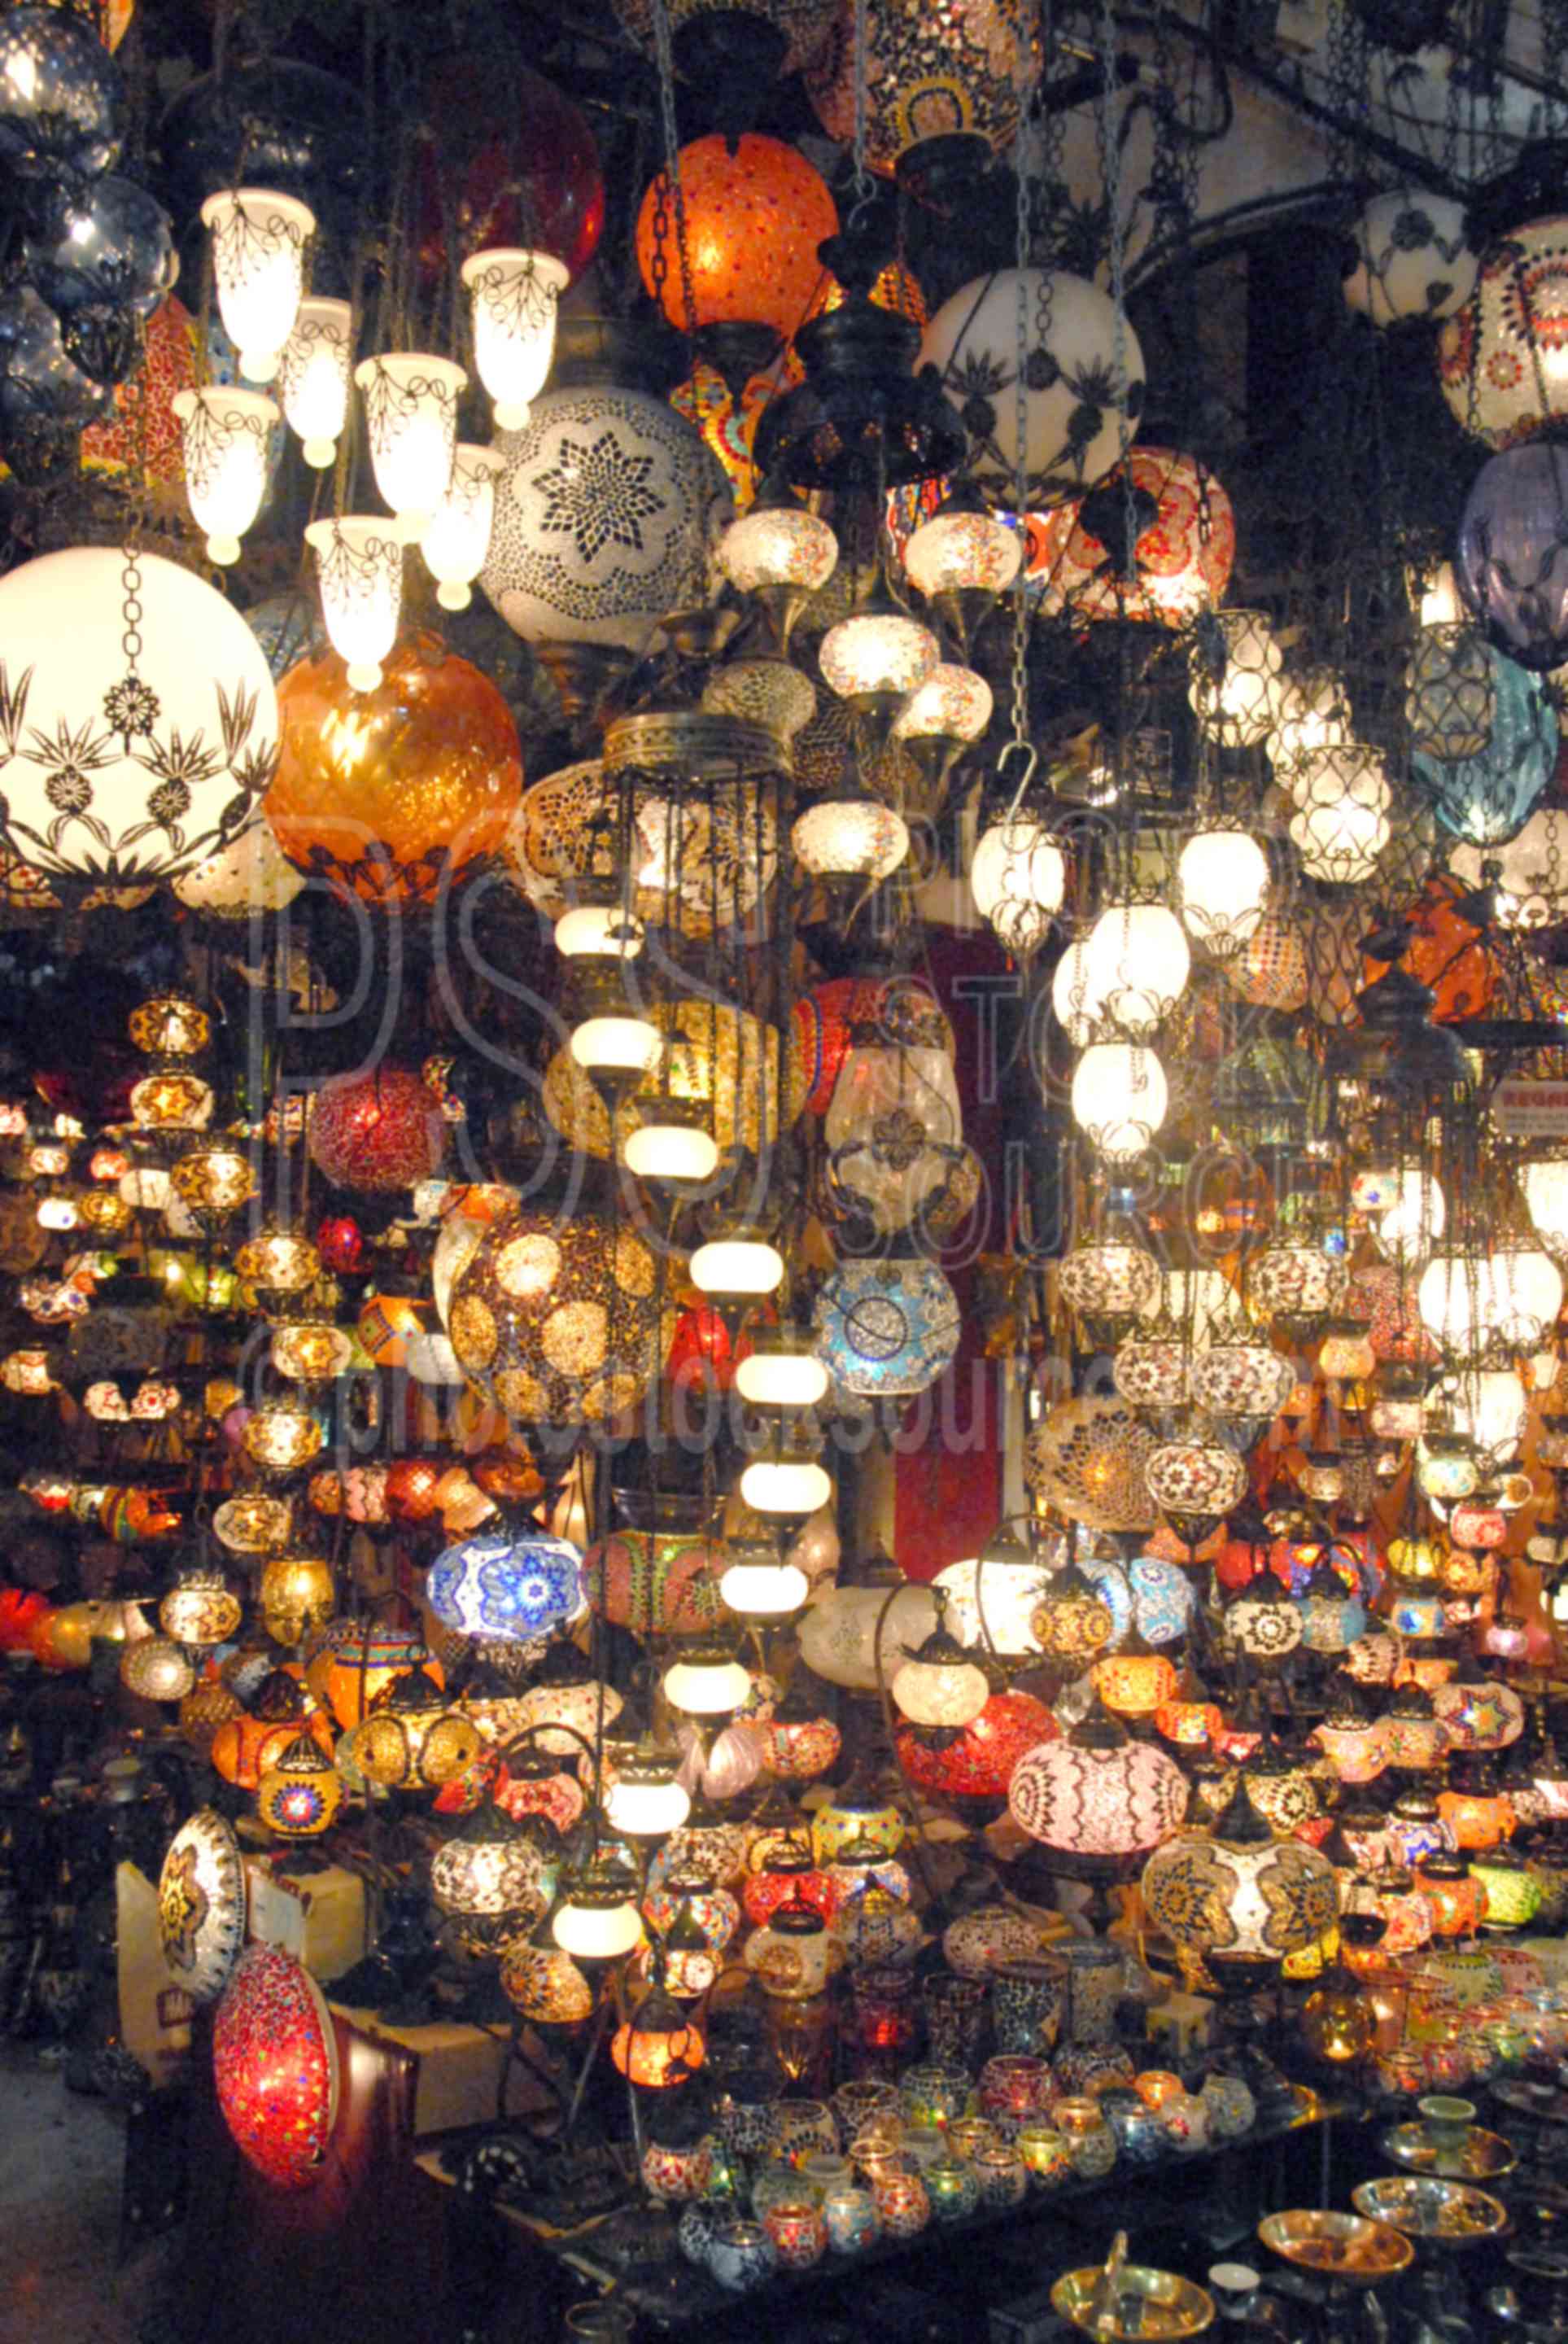 Colorful Turkish Lamps,seller,shop,merchandise,turkish,lamp,markets